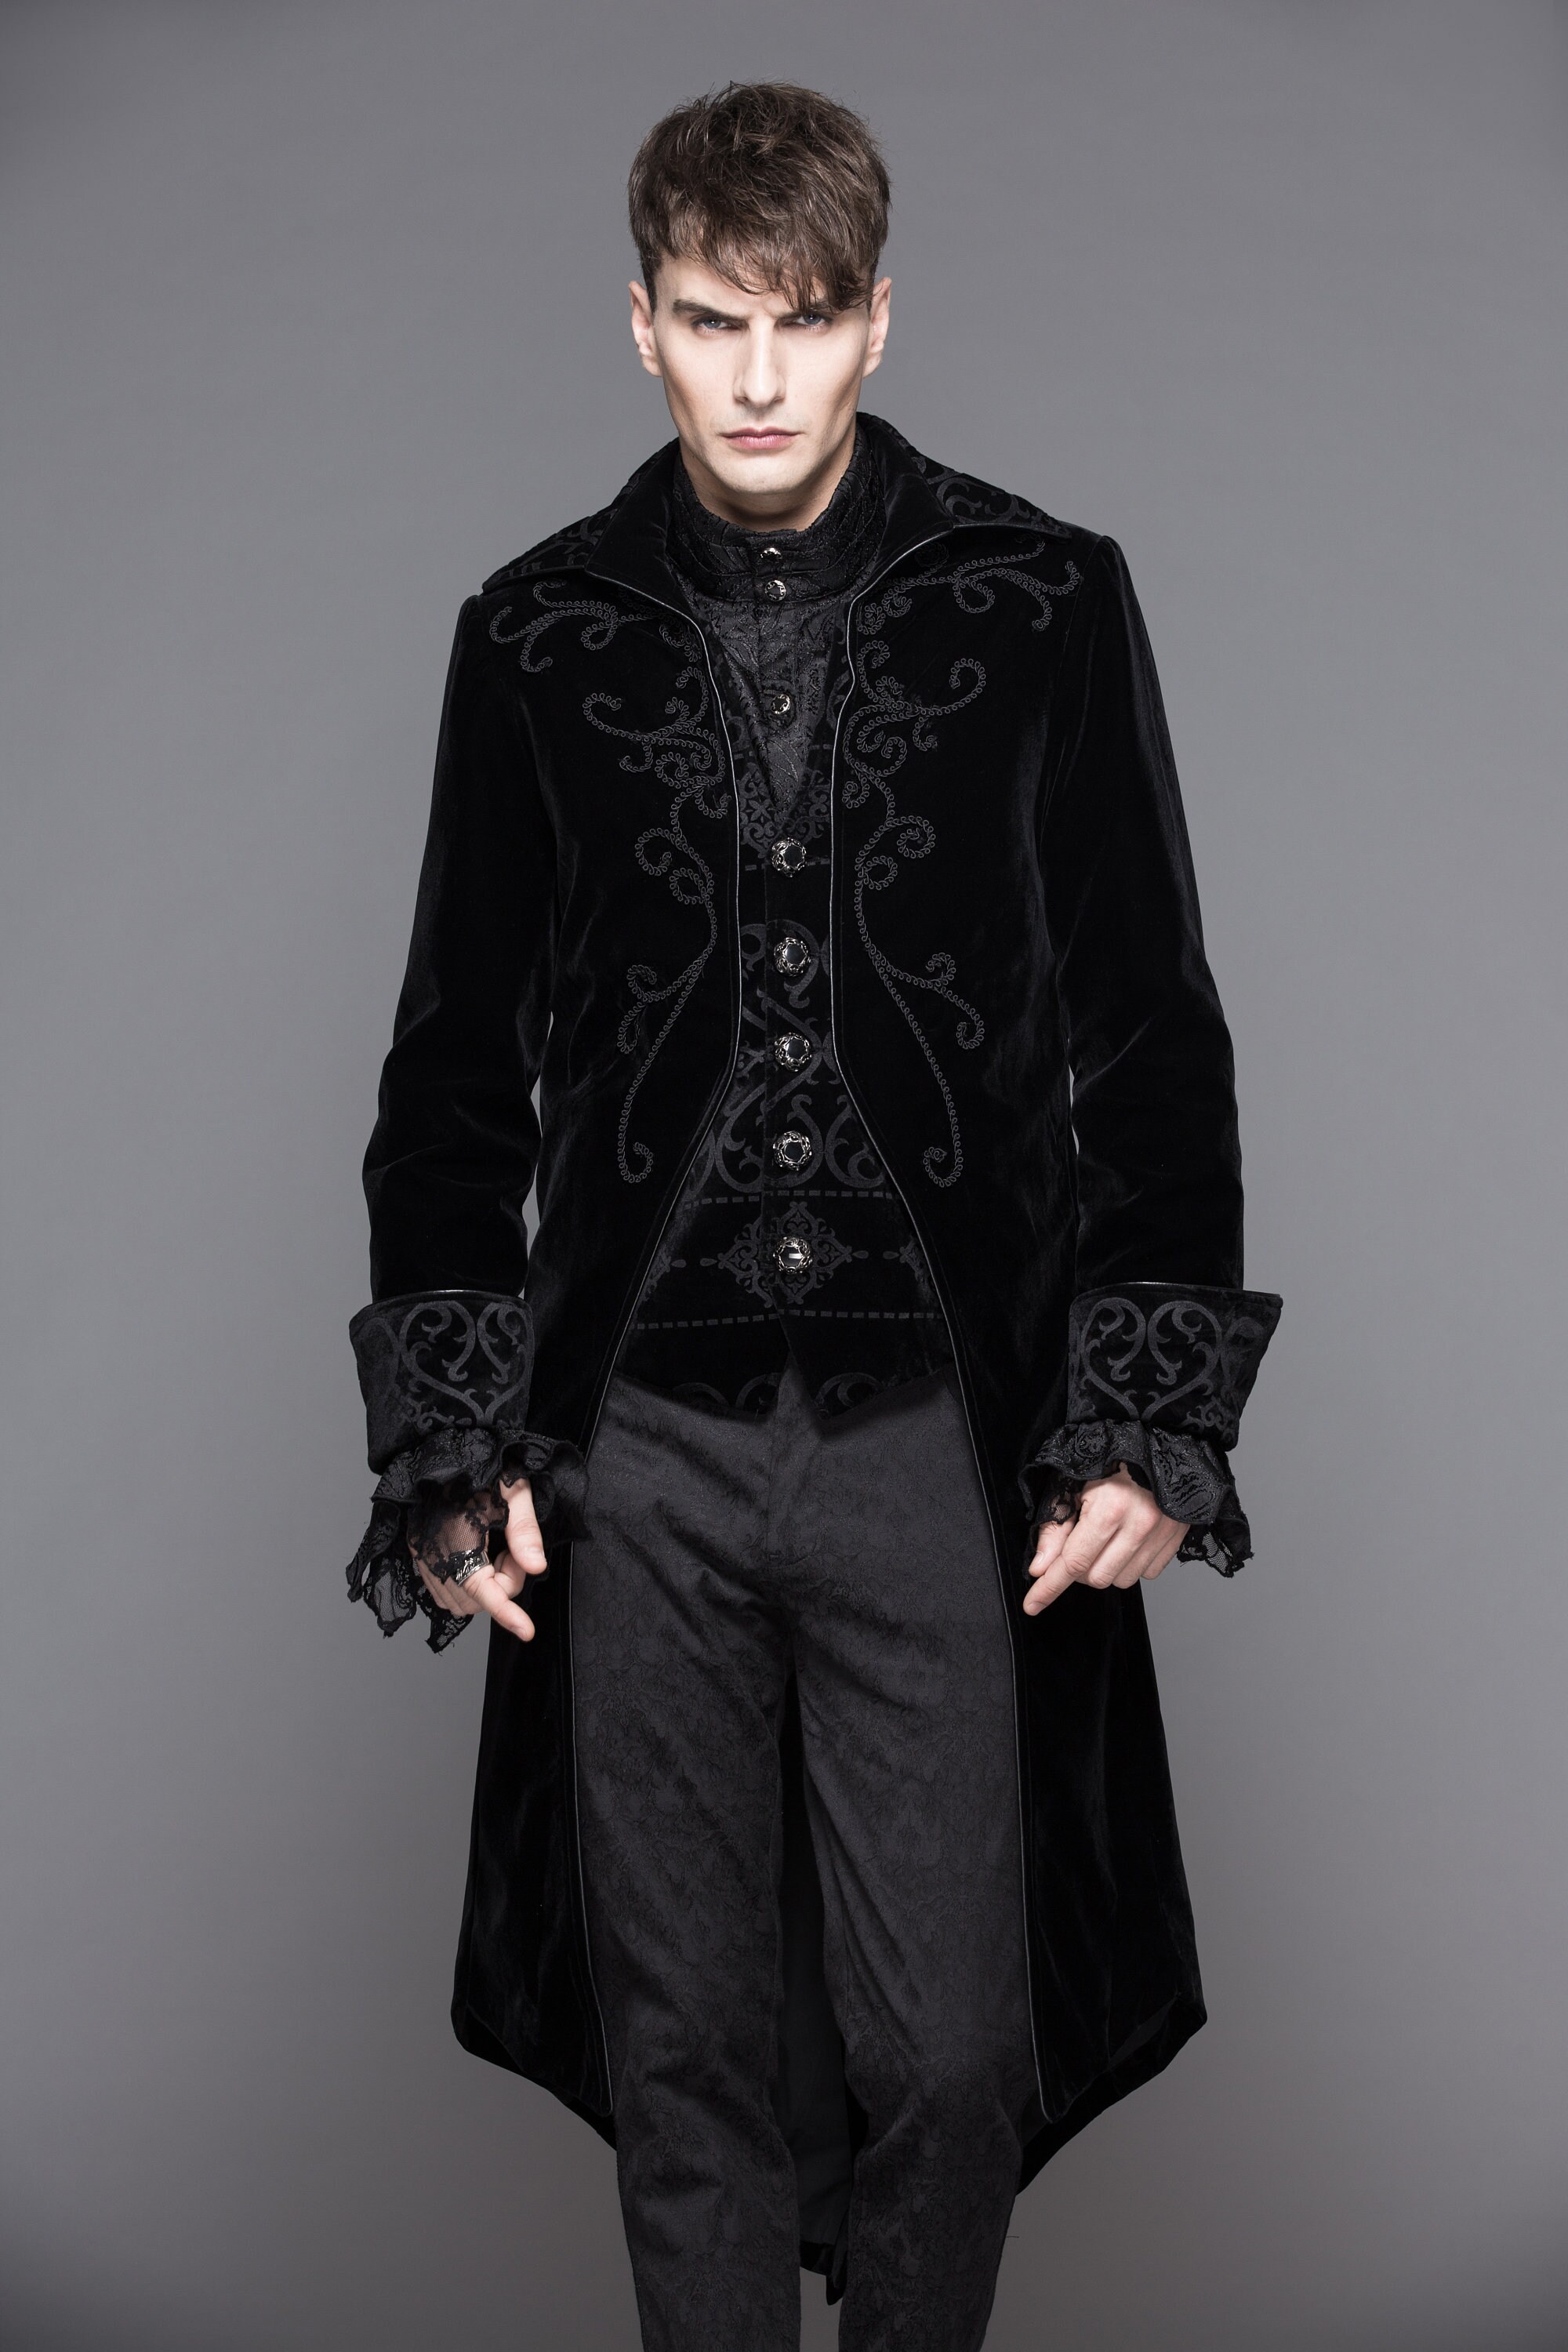 Mens Gothic Tailcoat Jacket Black Steampunk VTG Victorian Coat L/L, Burgundy 